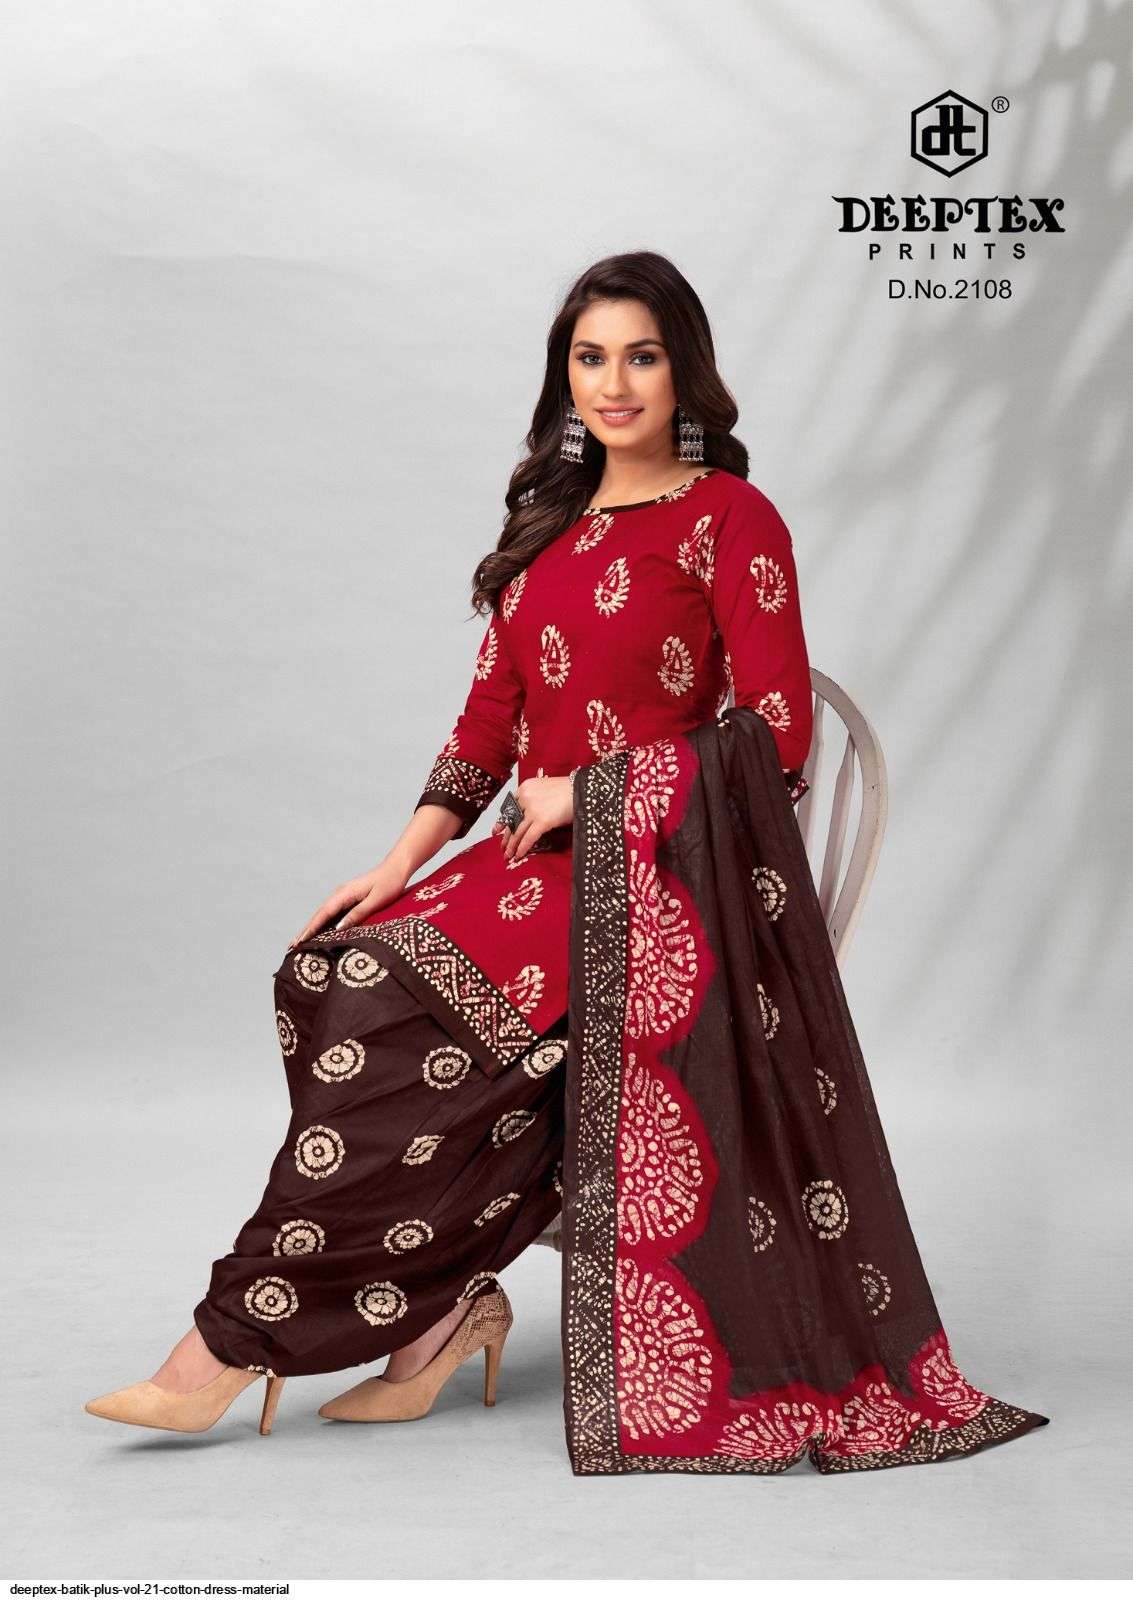 Batik Plus Vol-21 By Deeptex Prints 2101 To 2110 Series Beautiful Festive Suits Colorful Stylish Fancy Casual Wear & Ethnic Wear Pure Cotton Print Dresses At Wholesale Price